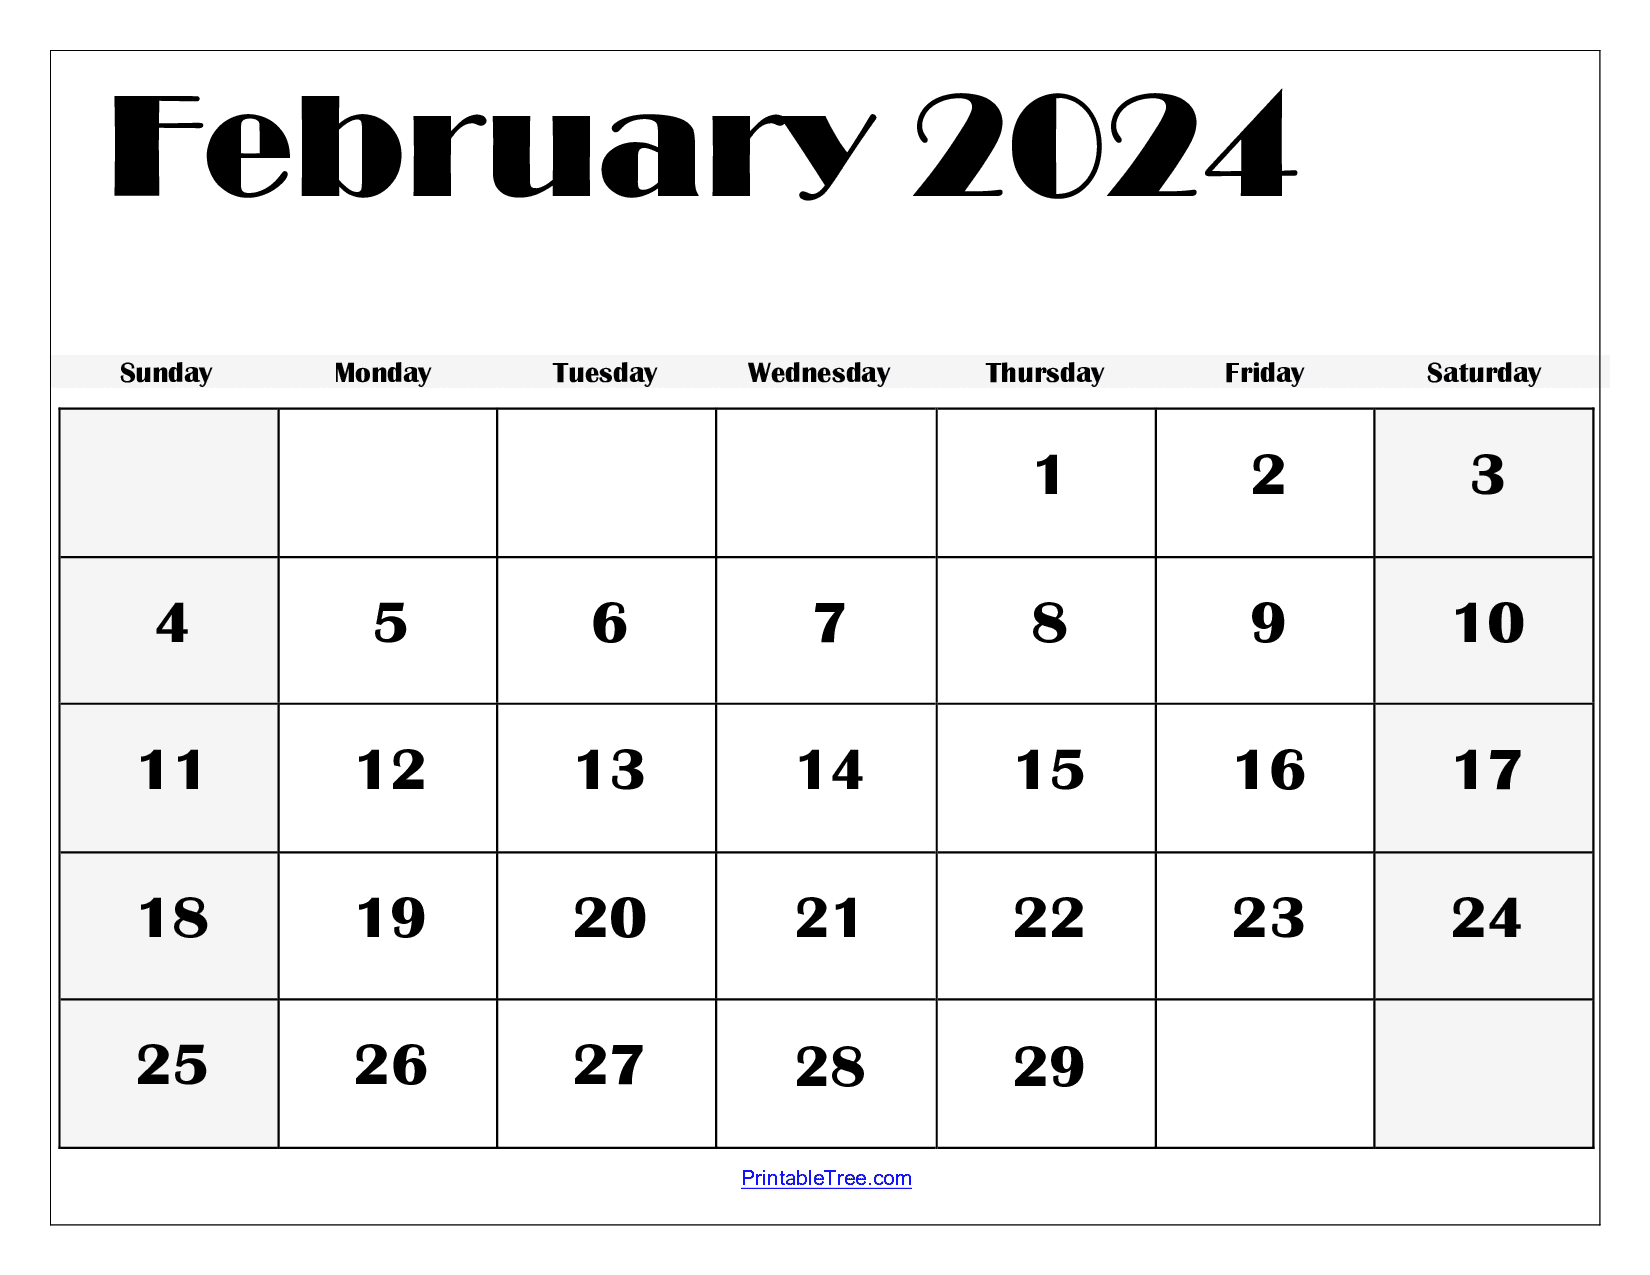 February 2024 Calendar Printable Pdf Template With Holidays for Printable Febuary 2024 Calendar